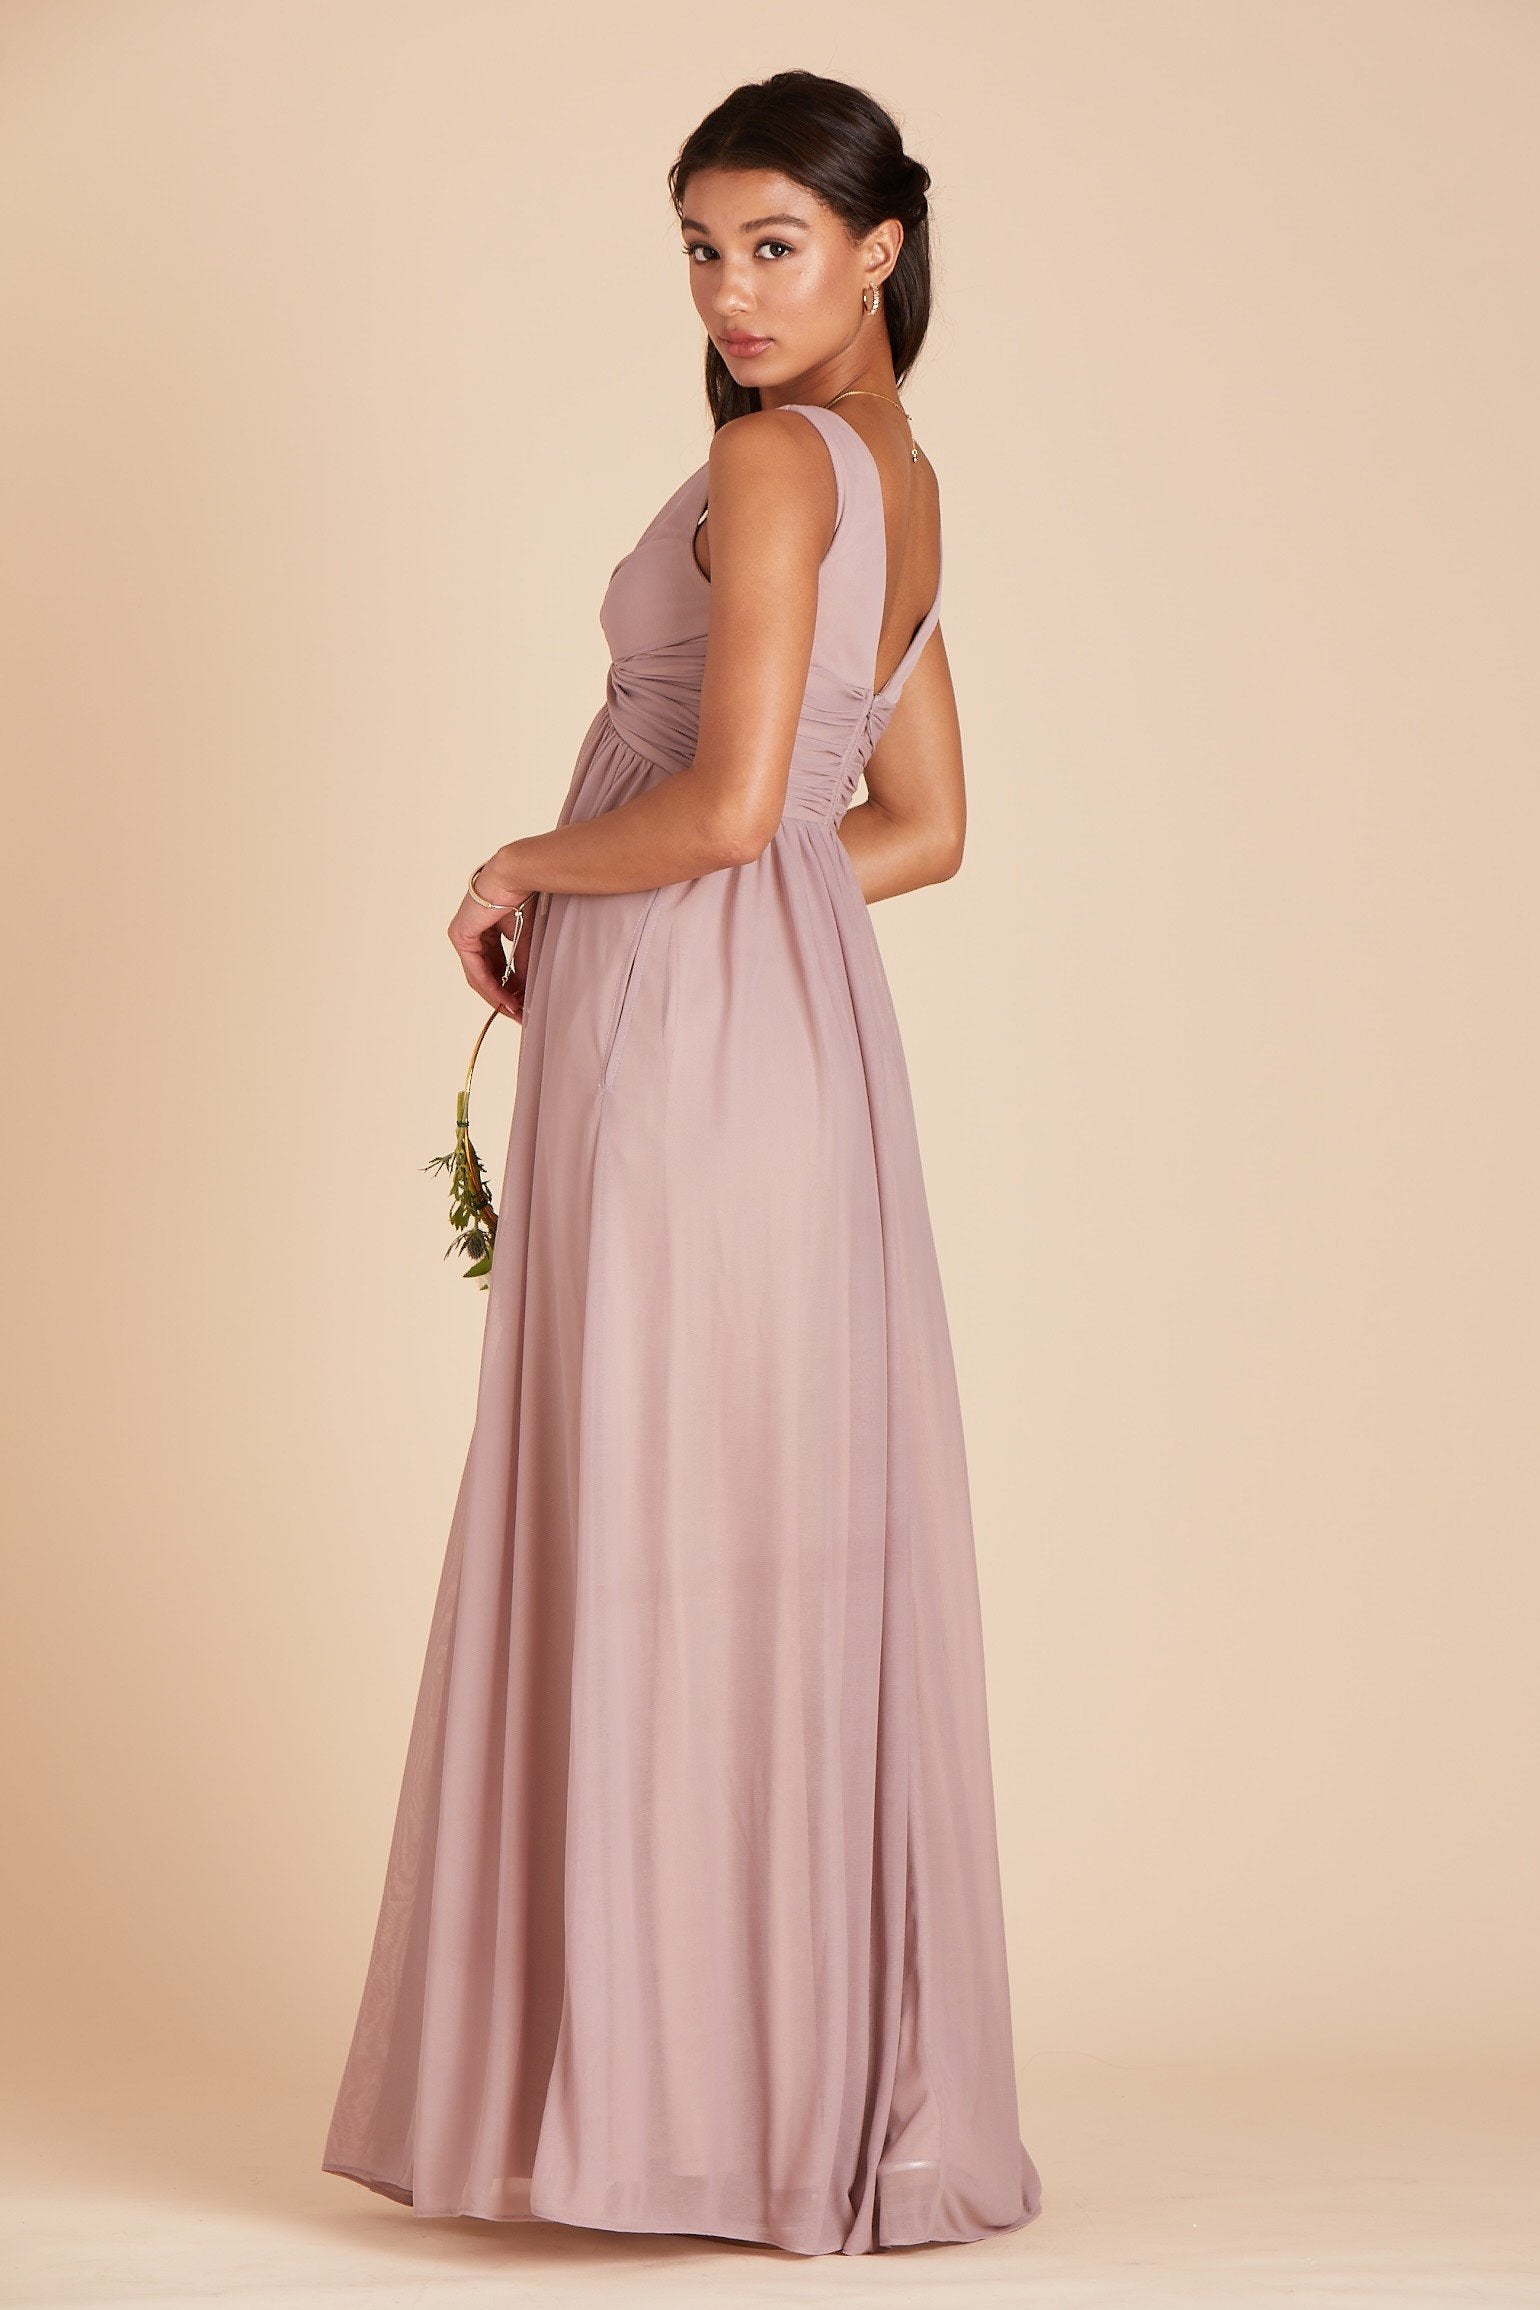 Lianna bridesmaid dress in mauve pink chiffon by Birdy Grey, side view